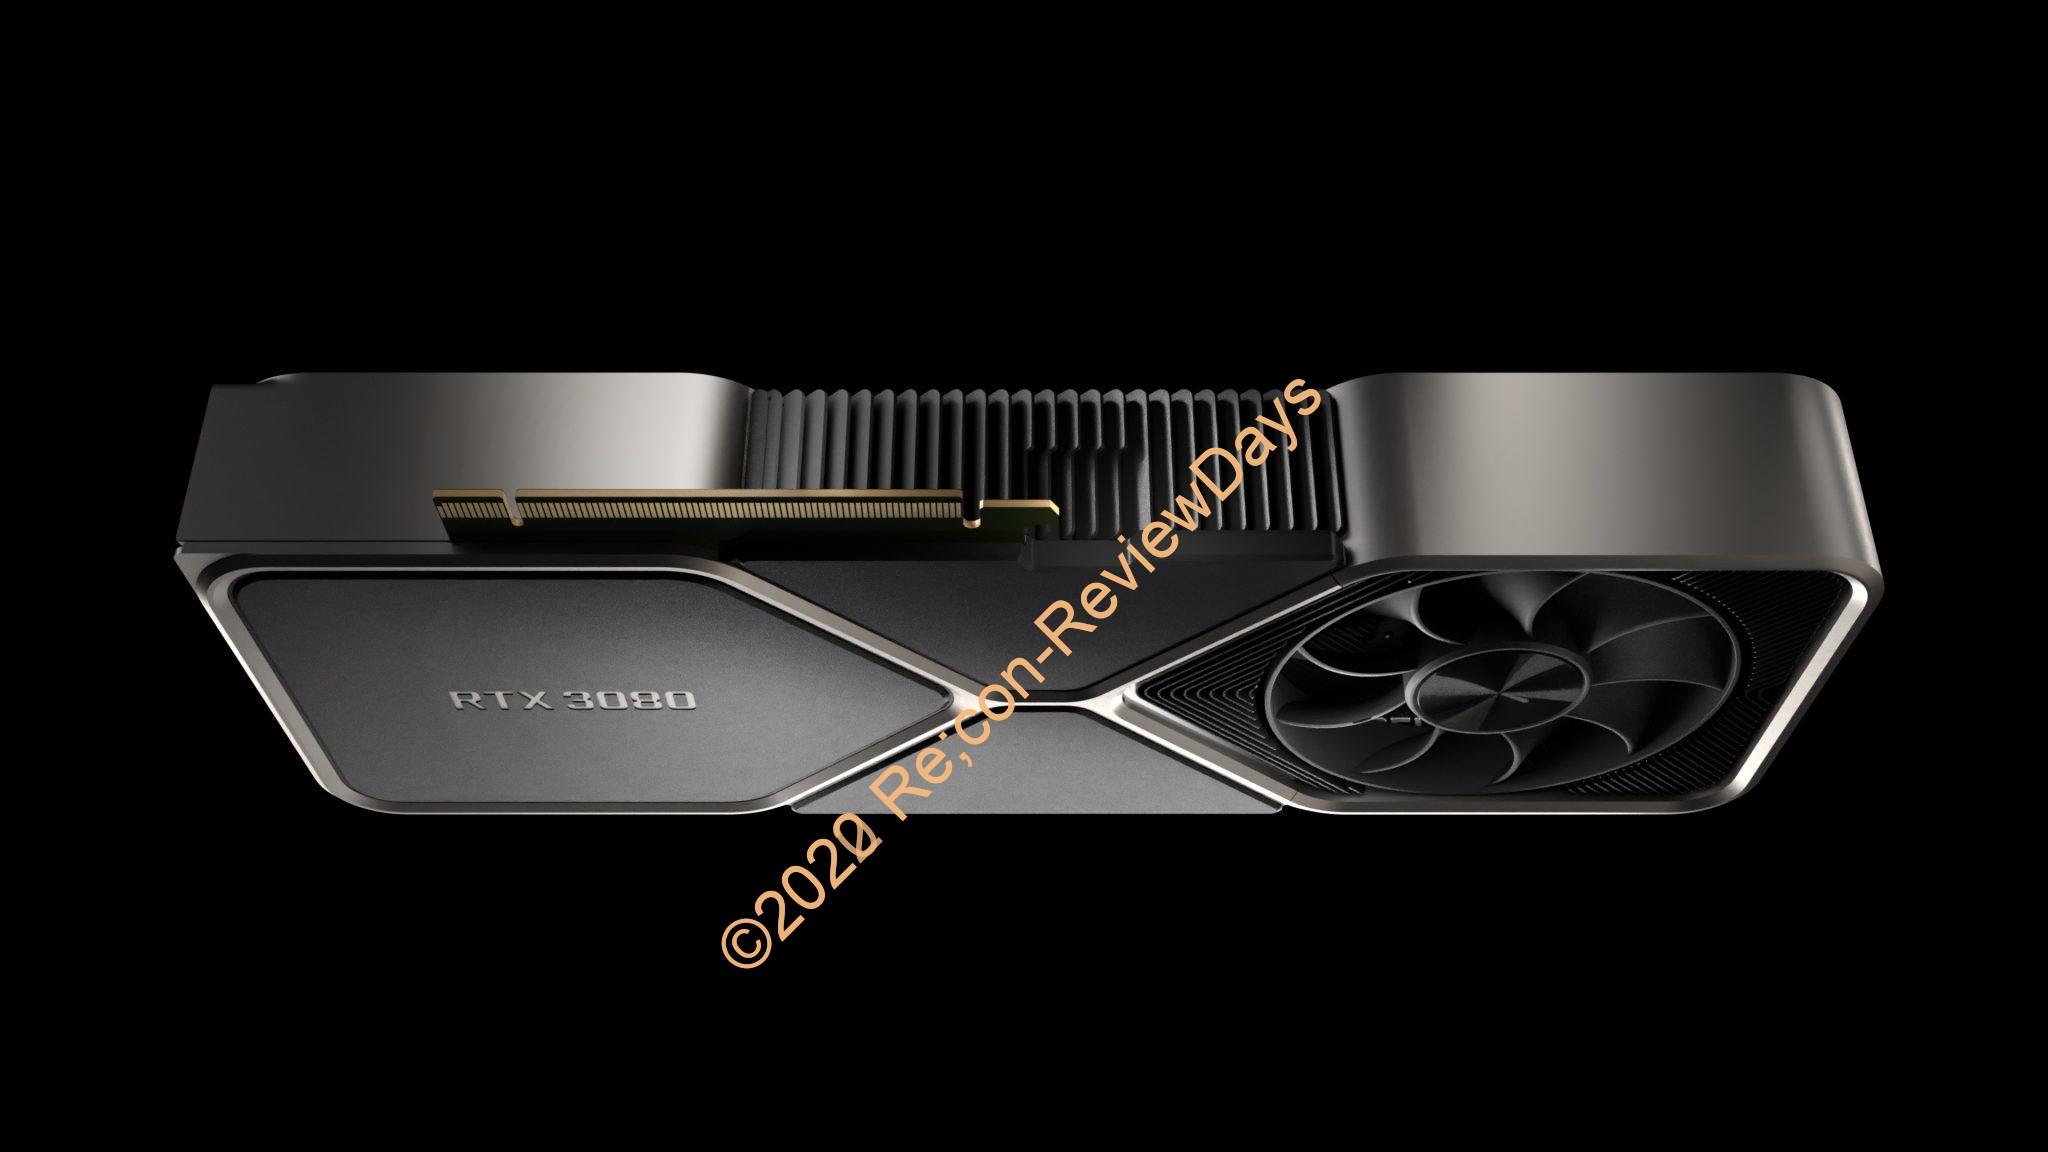 Nvidia GeForce RTX 3080 Founders Editionの外観レビューが公開 #Nvidia #GeForce #RTX3080 #Ampere